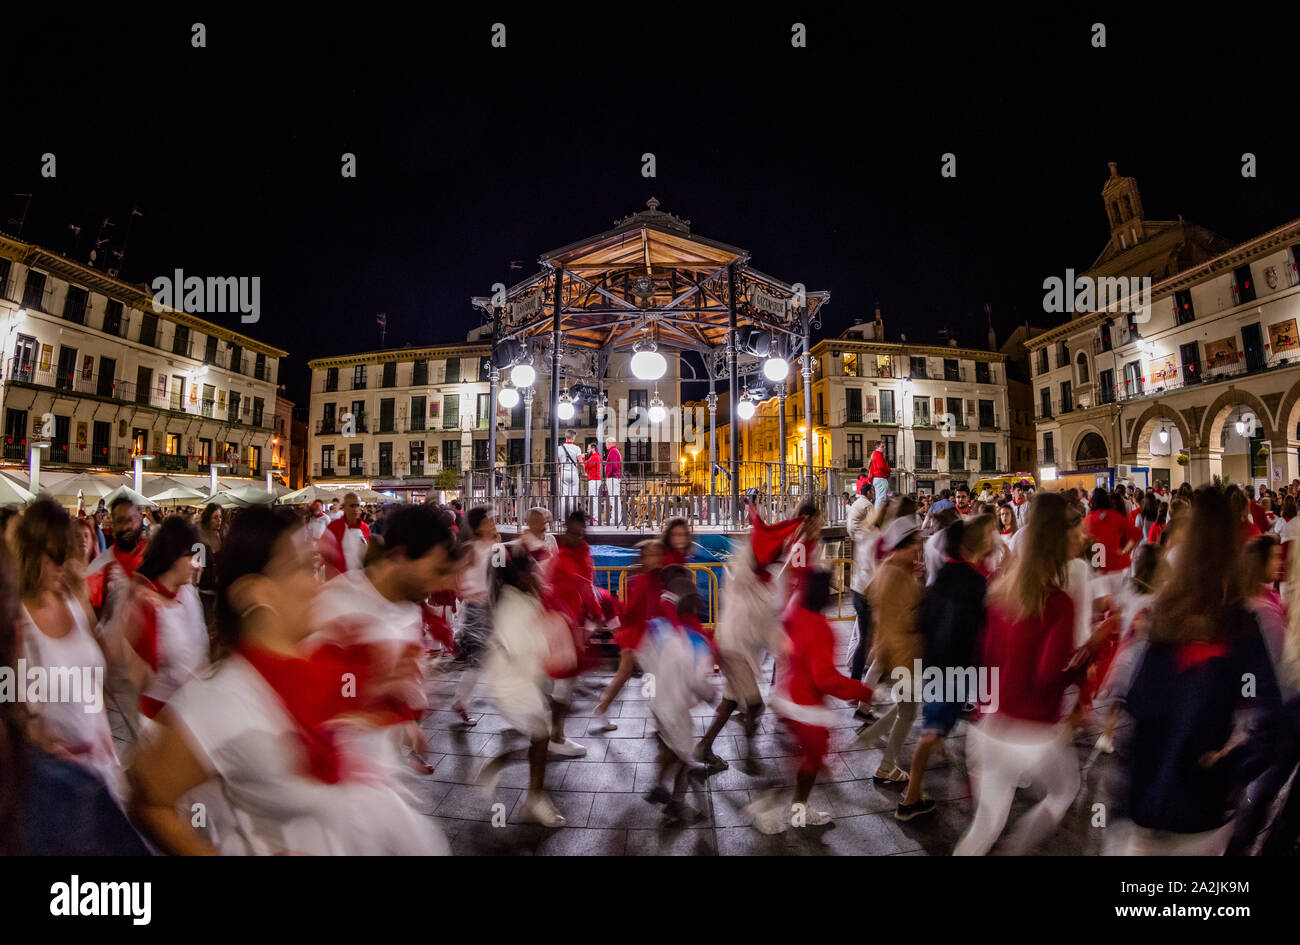 The Revoltosa ceremony/dance in the central plaza of Tudela, Spain during the Festivity of Santa Ana Stock Photo